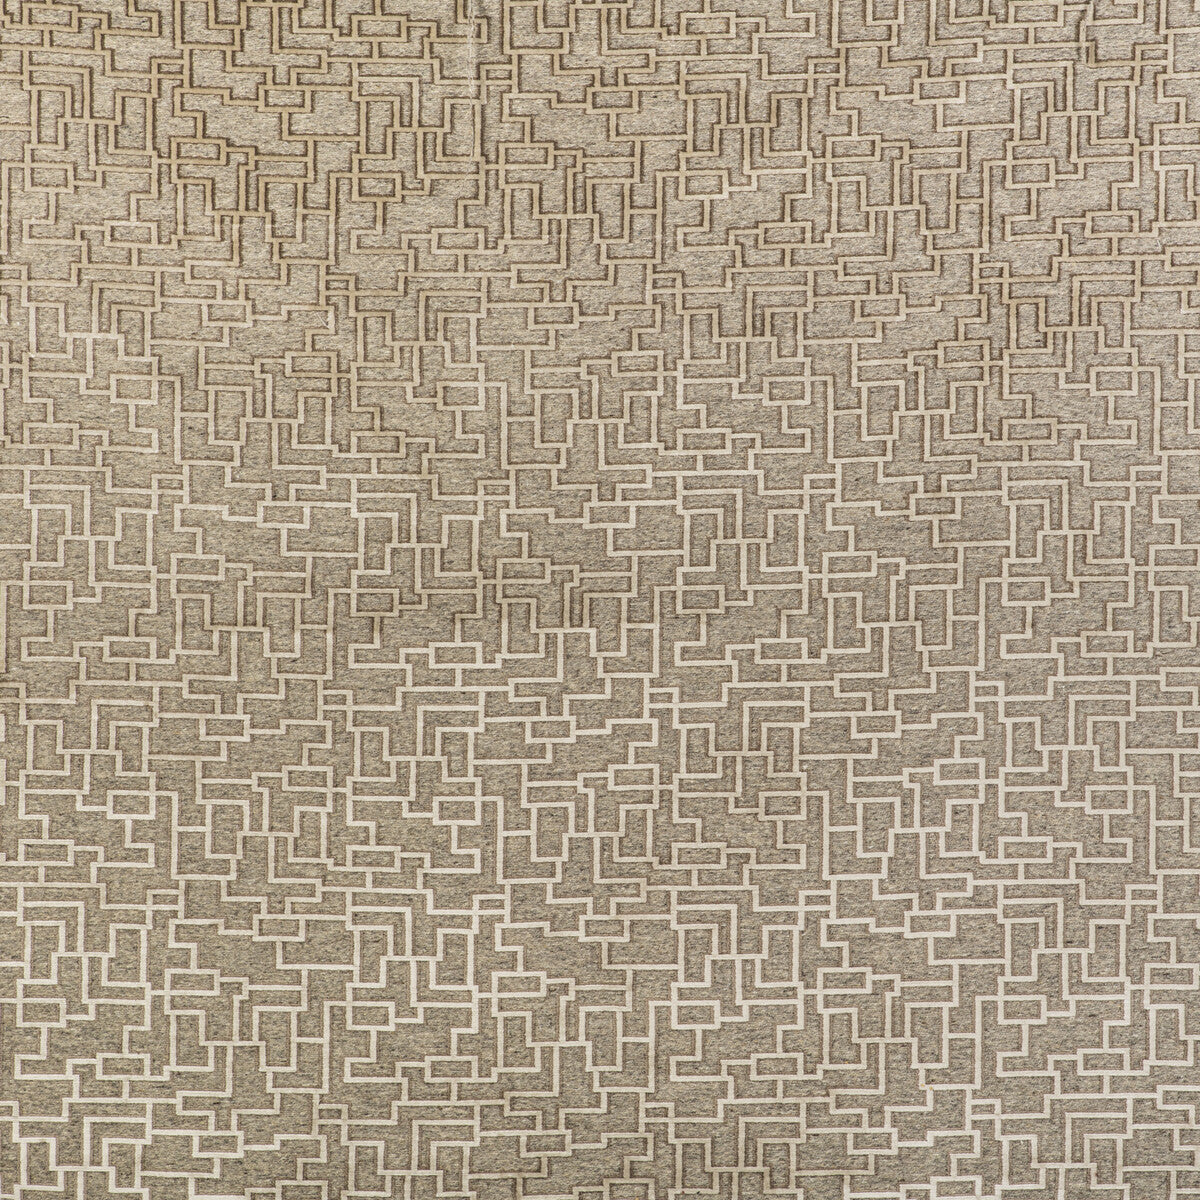 Laberinto fabric in crudo color - pattern GDT5501.004.0 - by Gaston y Daniela in the Gaston Libreria collection